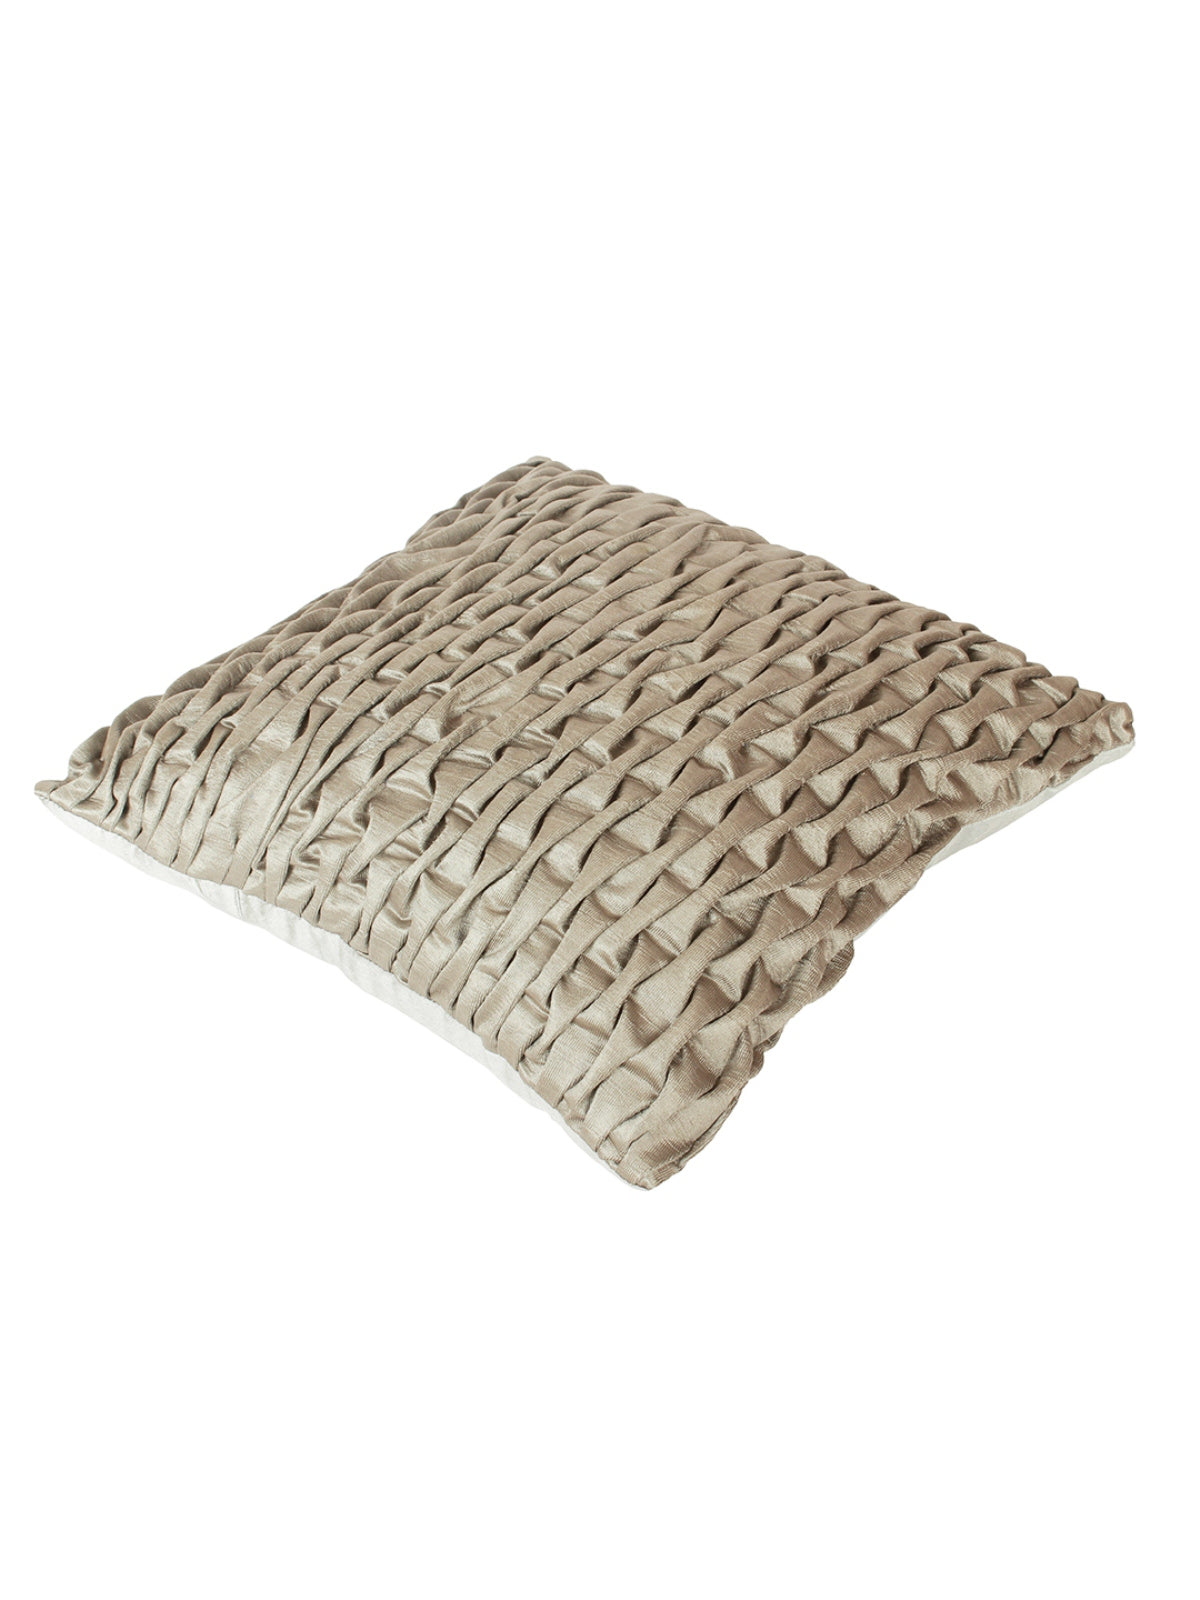 ROMEE Silver Geometric Printed Cushion Covers Set of 2